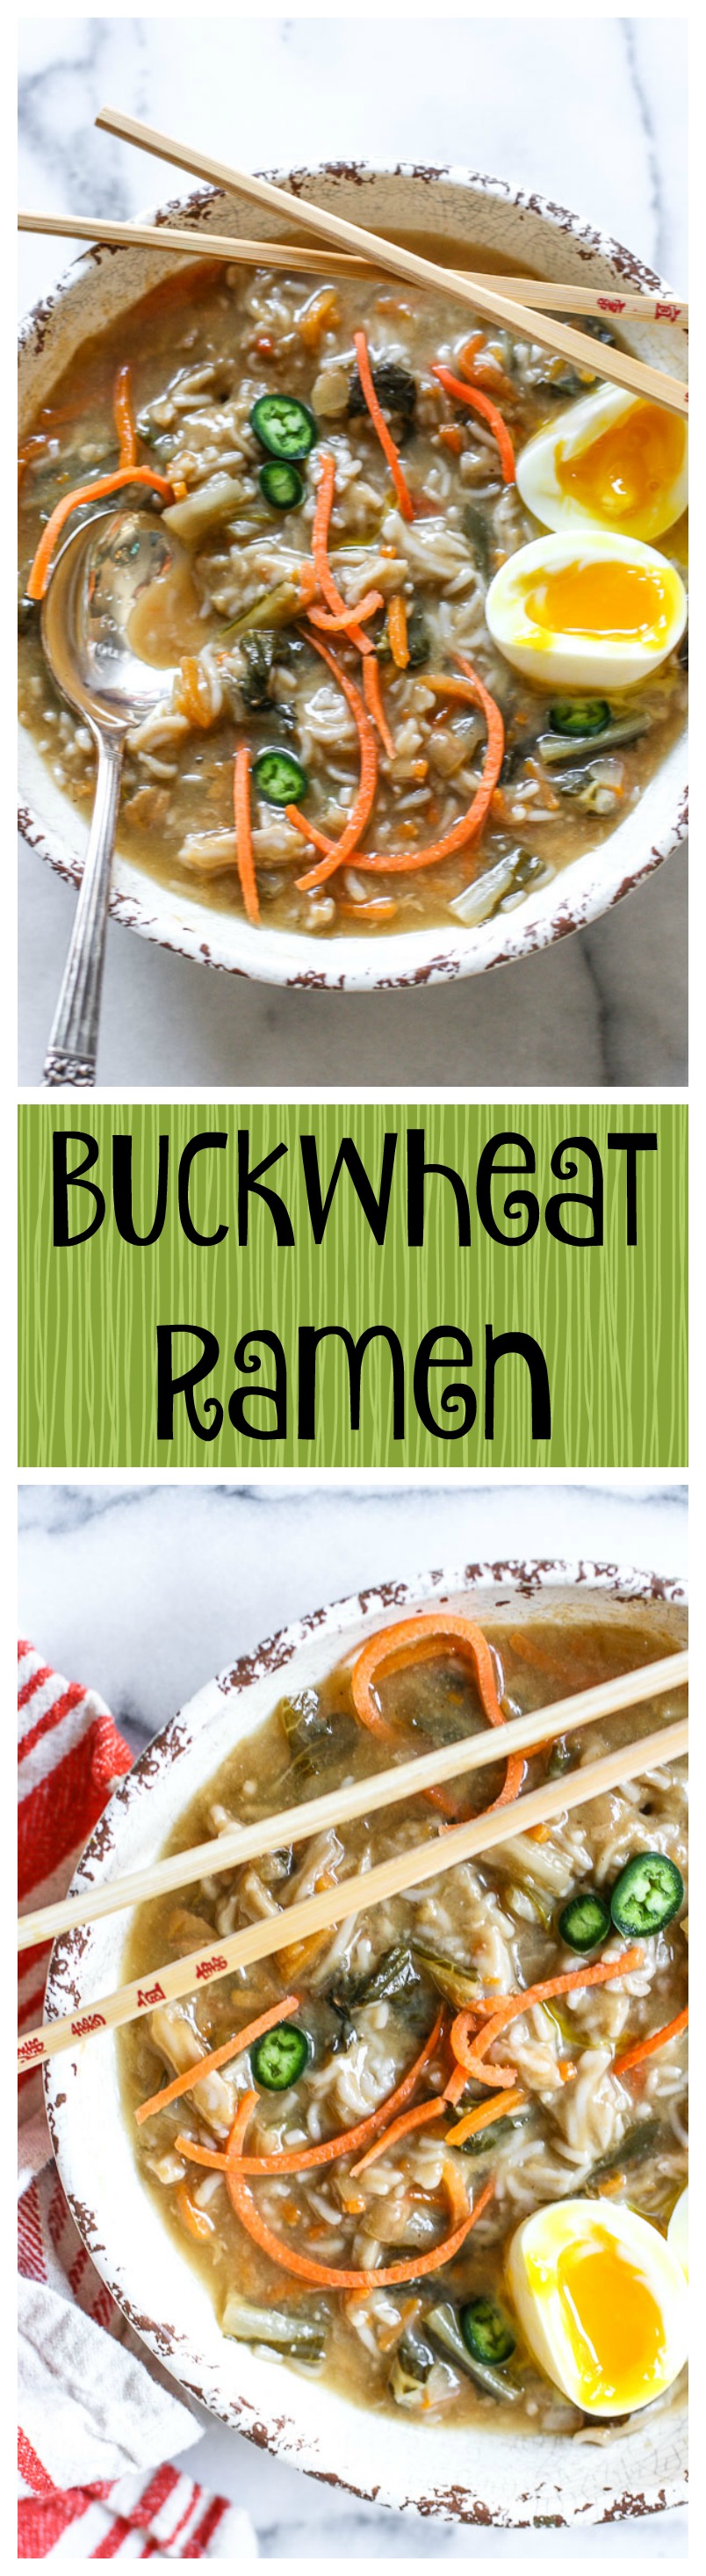 buckwheat ramen soup